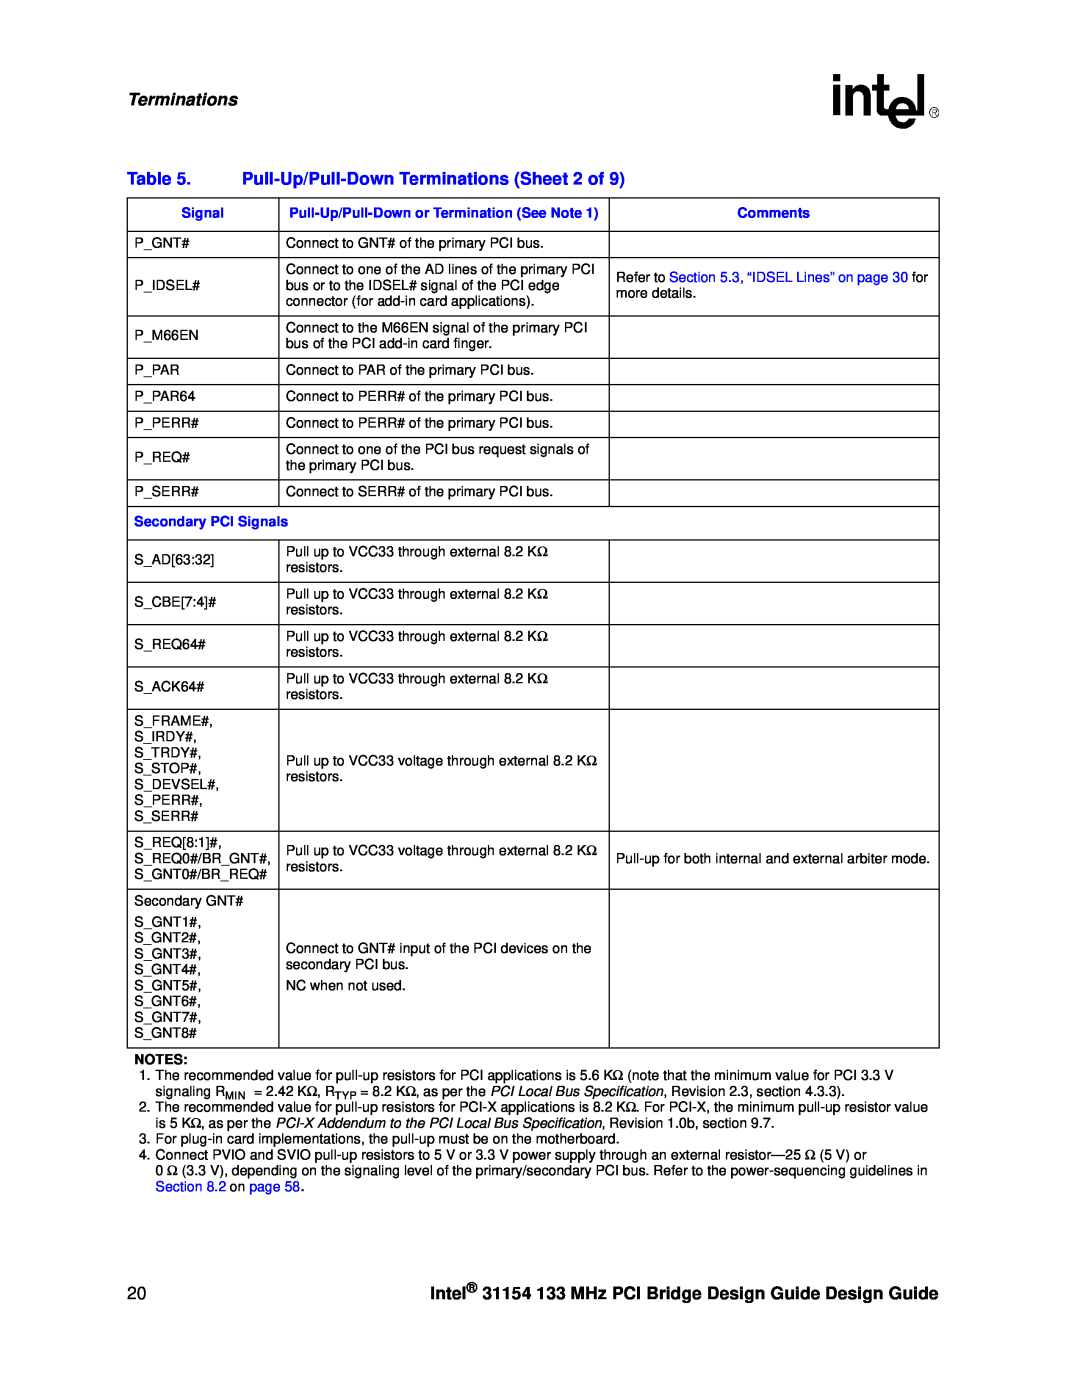 Intel manual Pull-Up/Pull-Down Terminations Sheet 2 of, Intel 31154 133 MHz PCI Bridge Design Guide Design Guide, Signal 